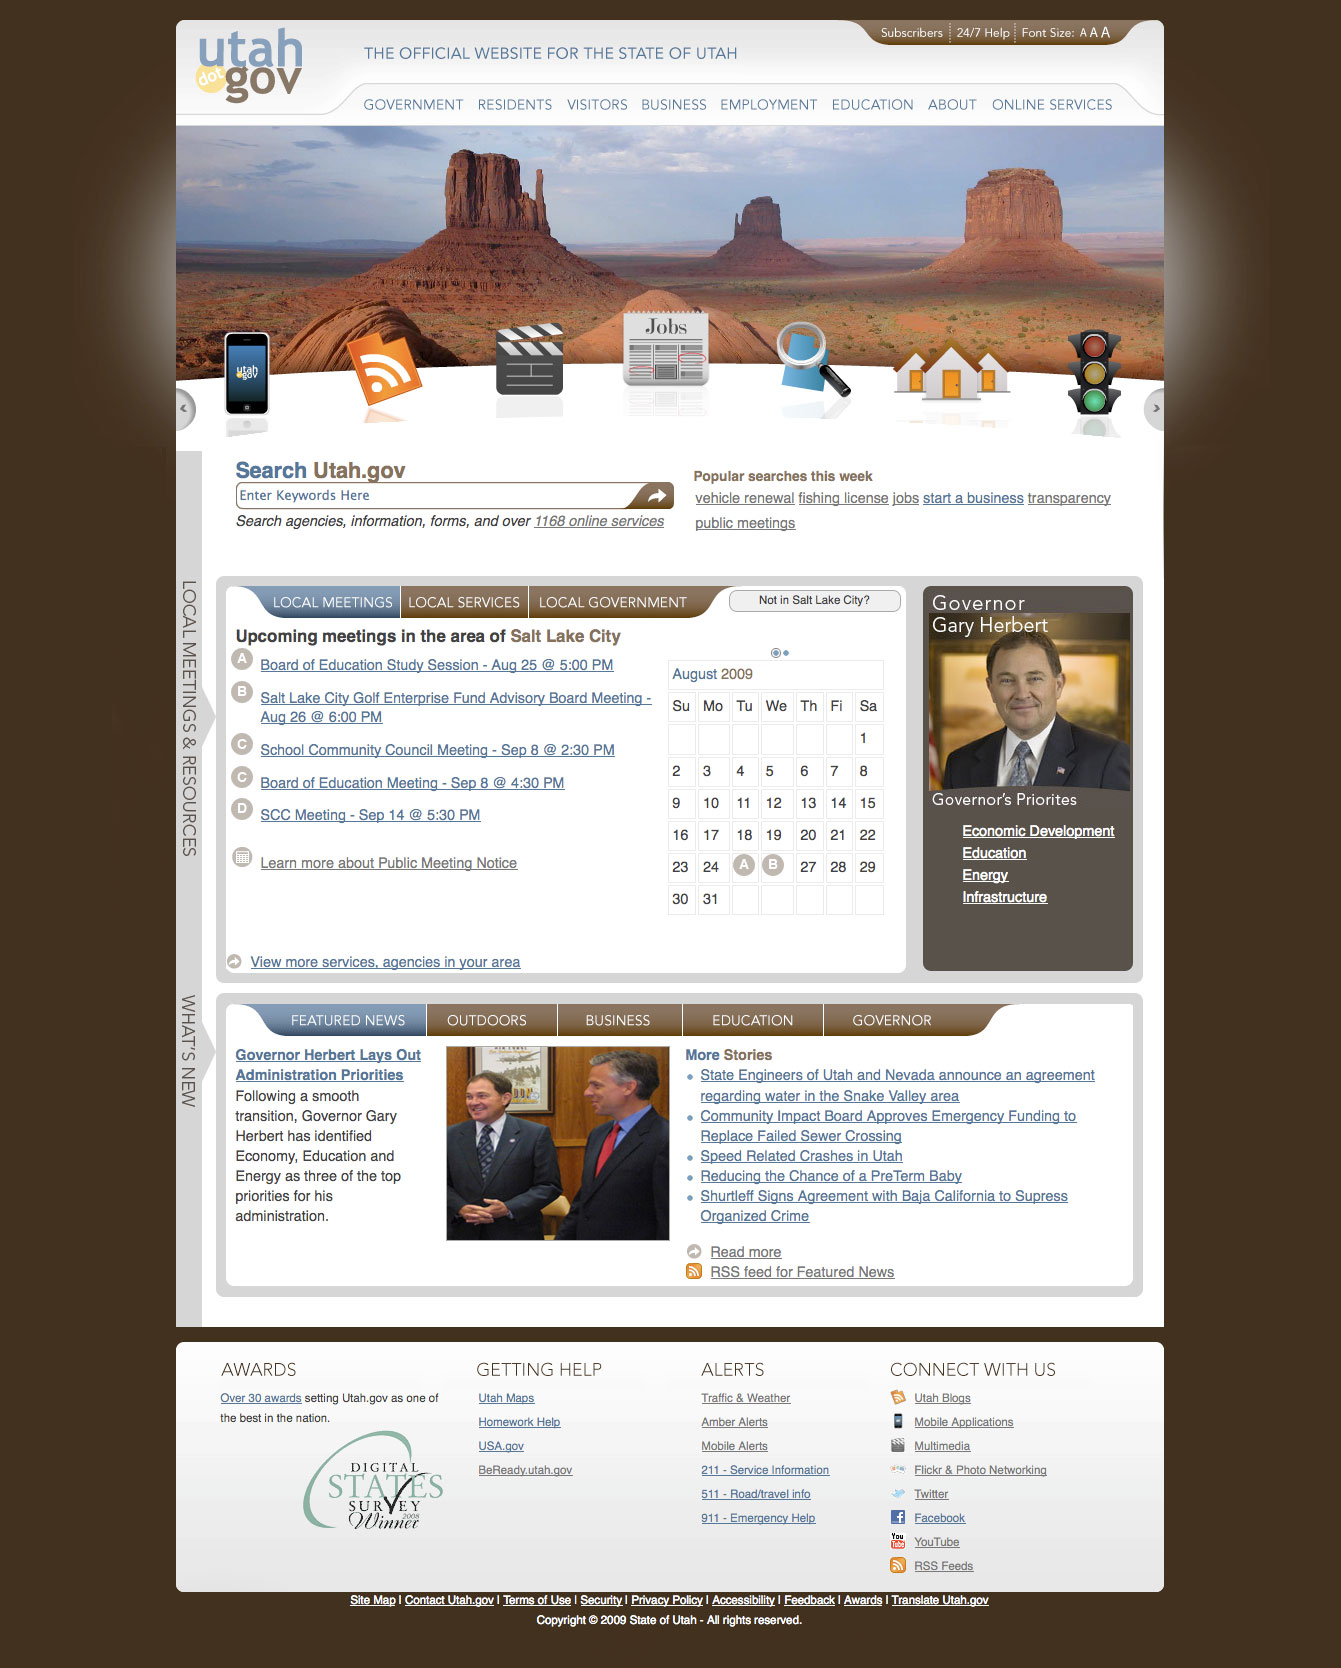 Utah.gov/The Official Website of the State of Utah image